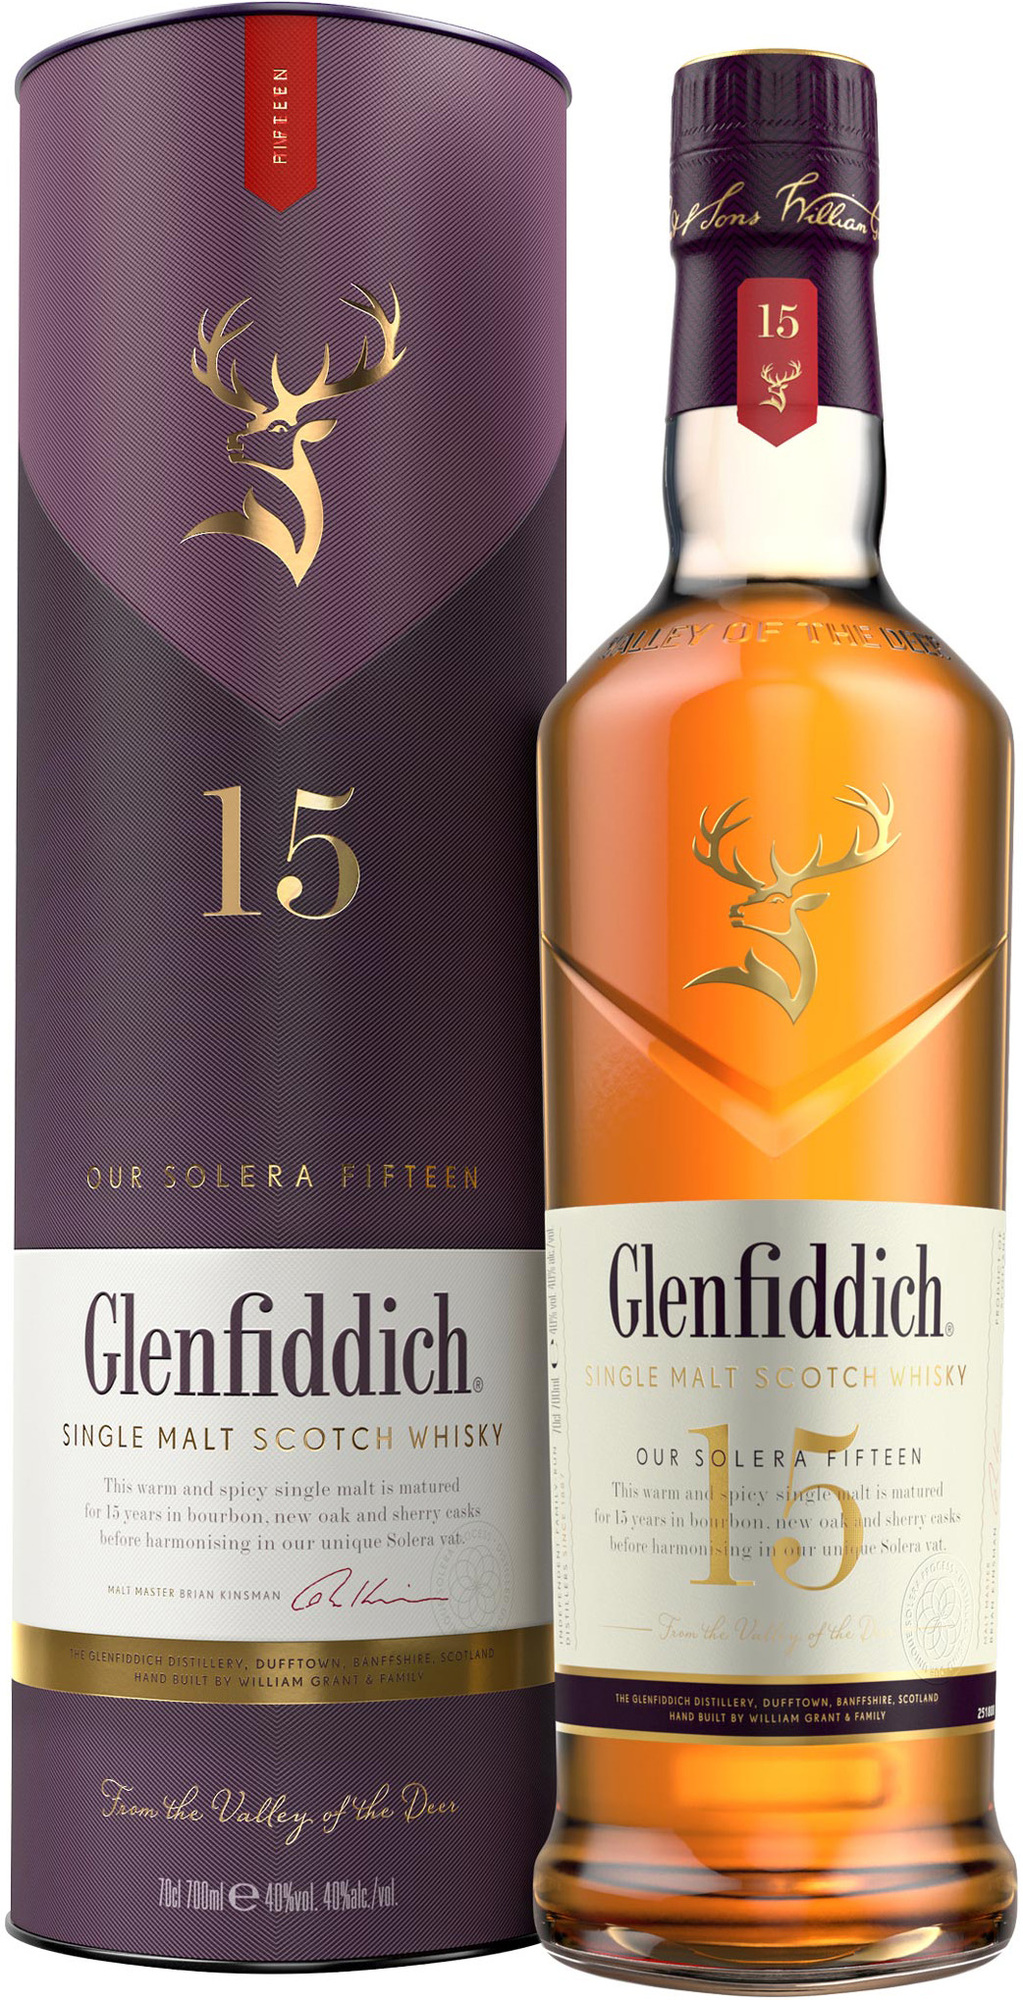 Glenfiddich 15 letá 40% 0,7l